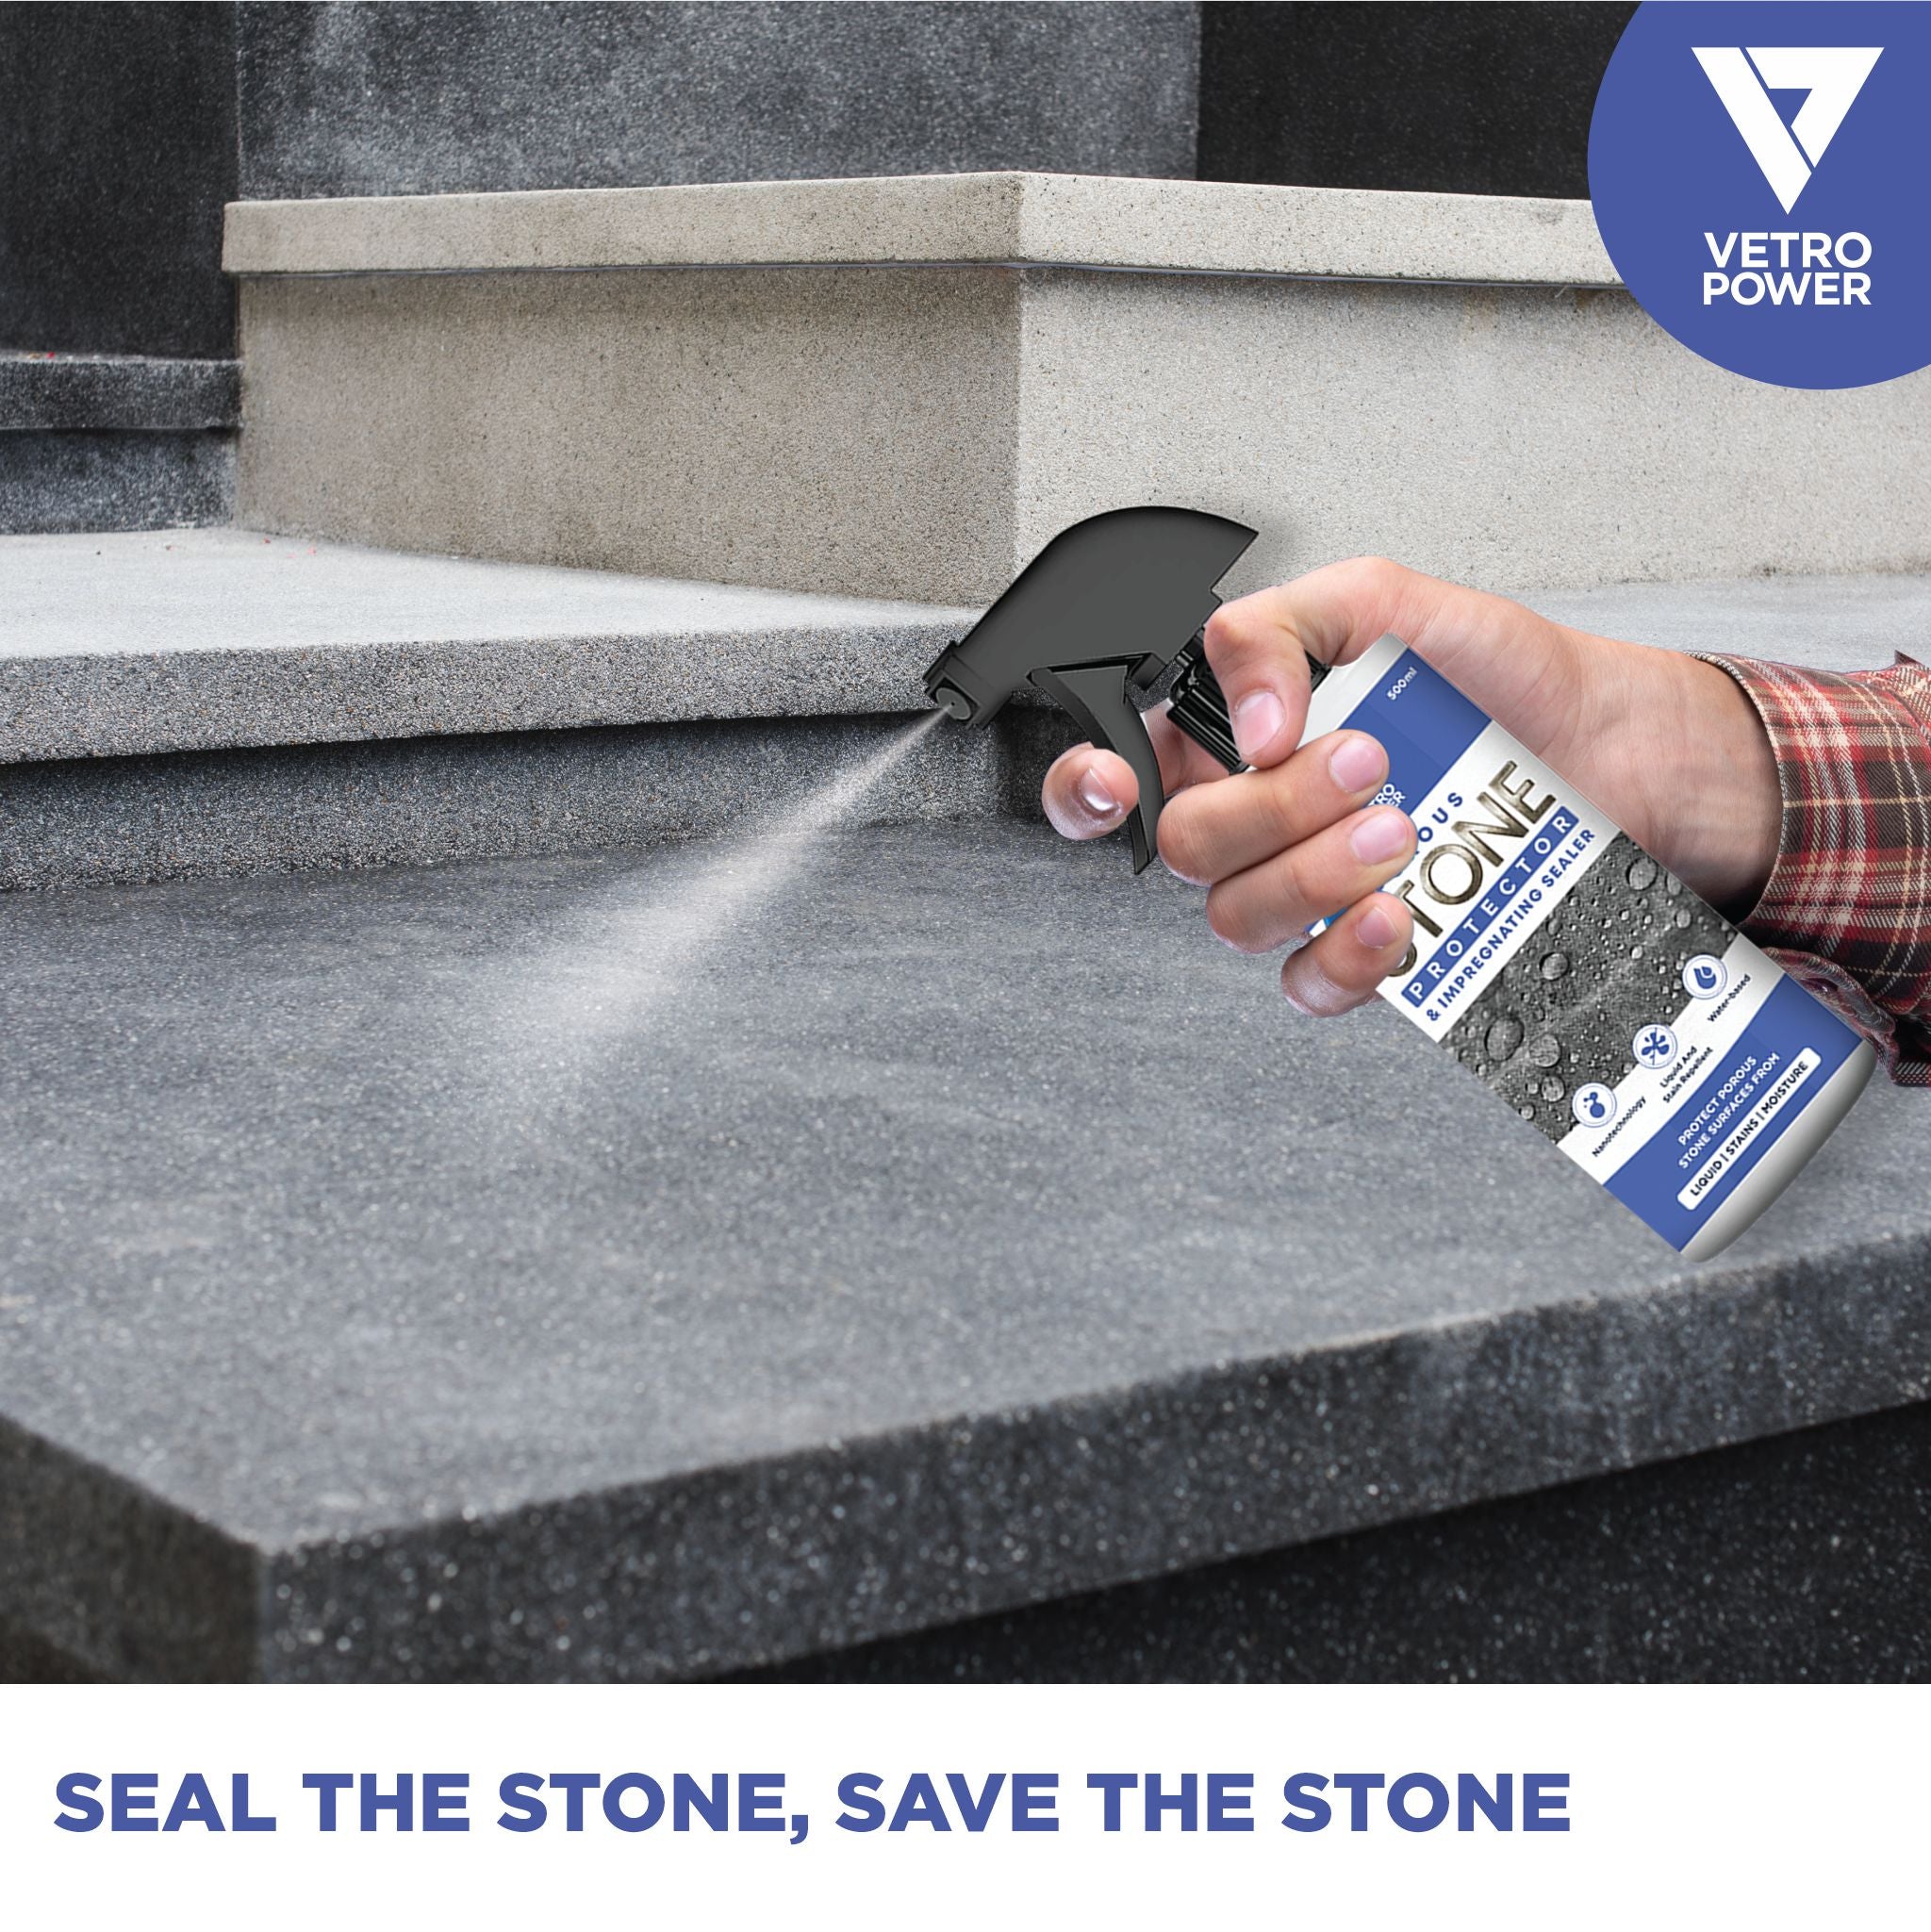 Vetro Power Porous Stone Protector Spray and Impregnating Sealer, 1L